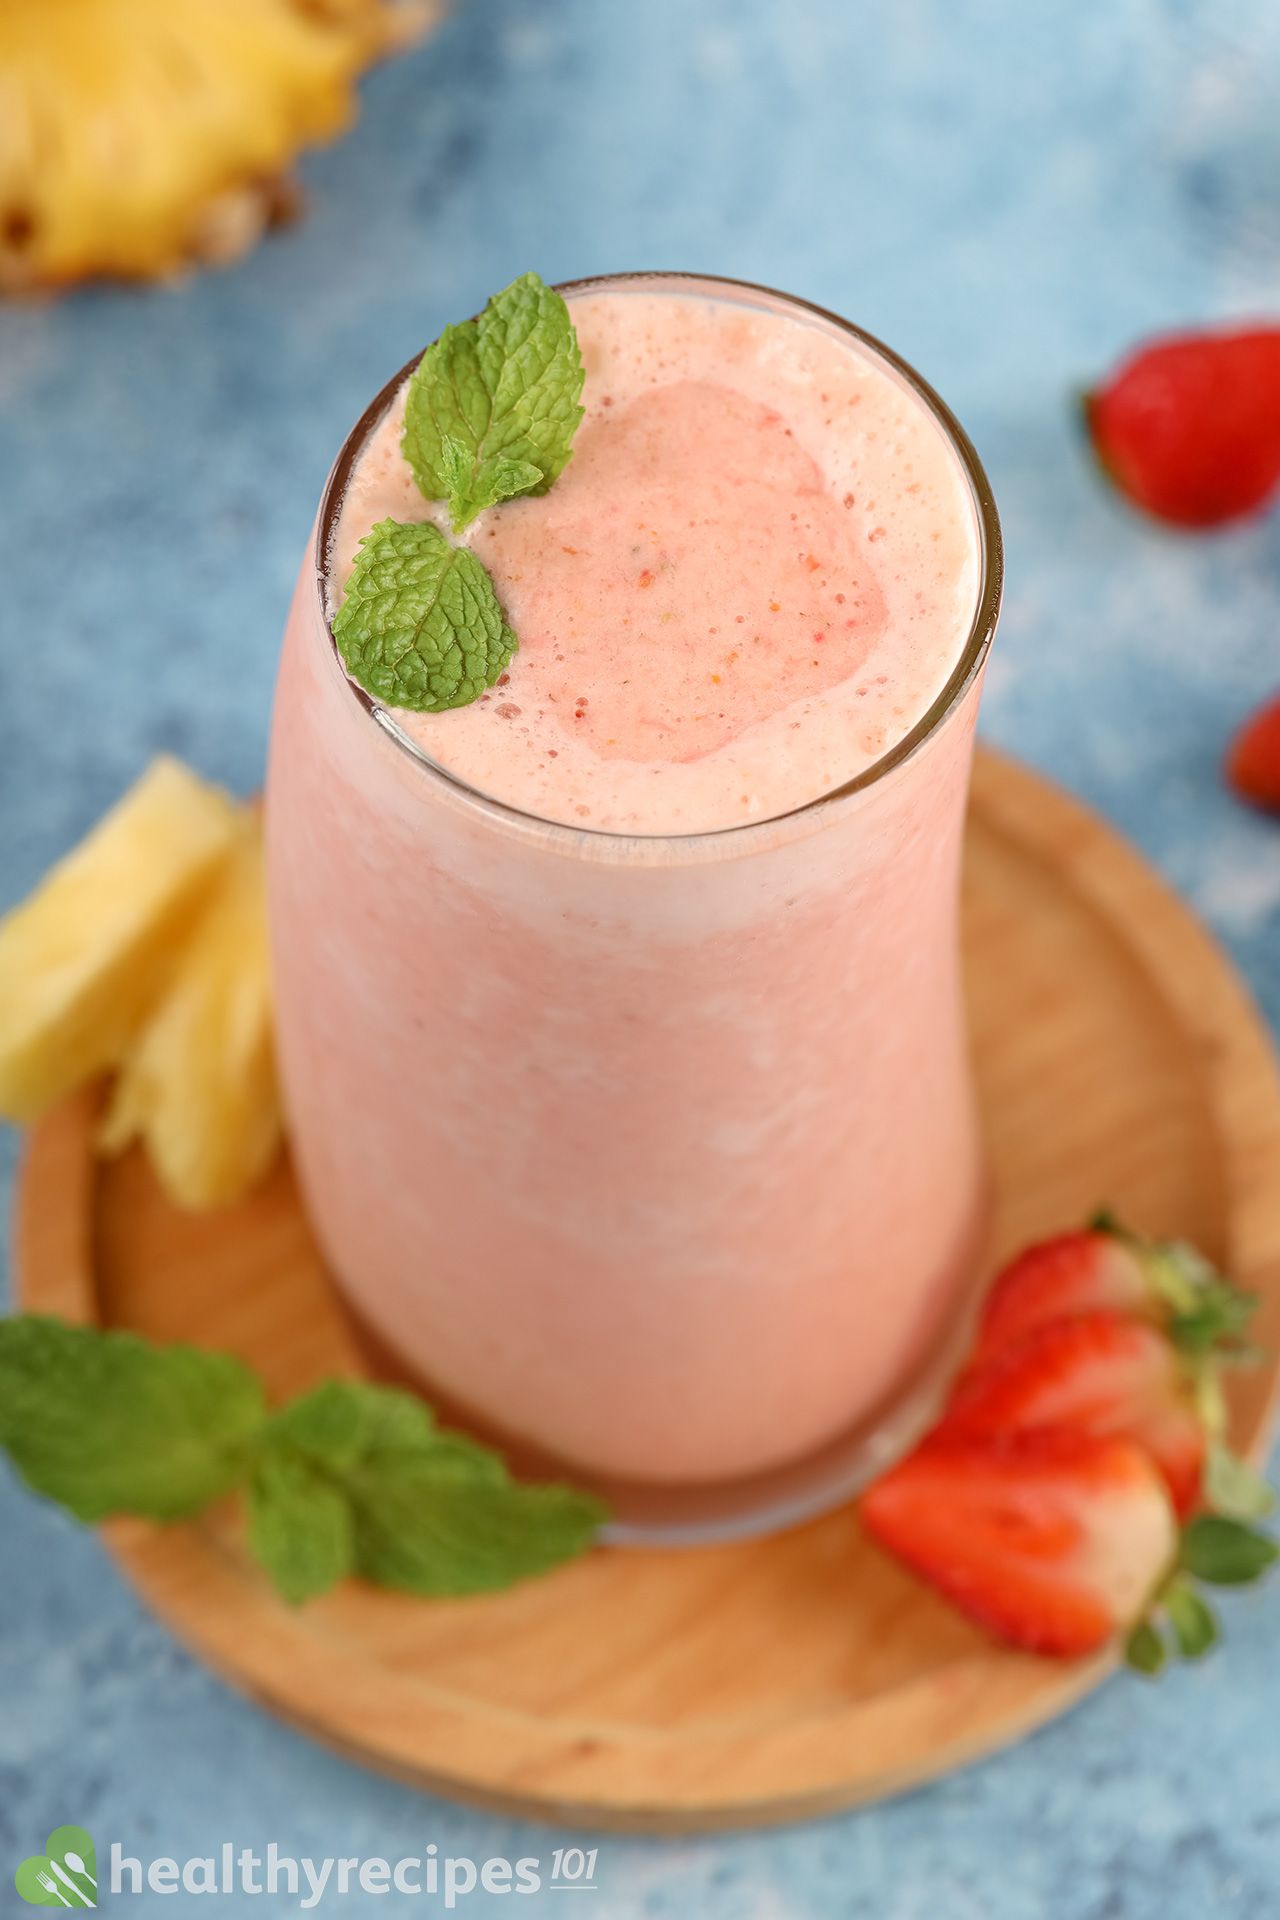 Strawberry Pineapple Smoothie’s Benefits